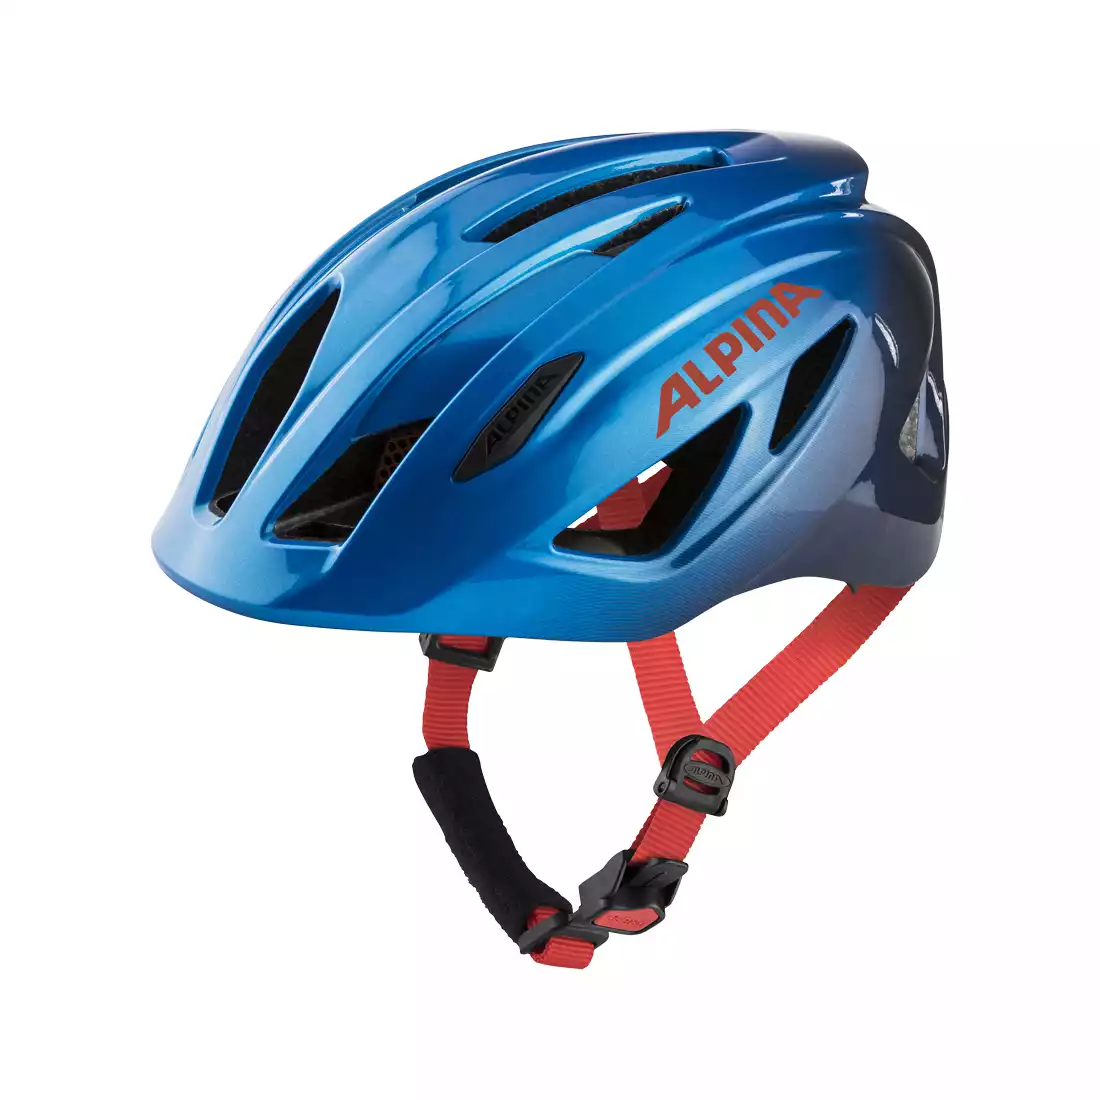 ALPINA PICO Children's bicycle helmet, true blue gloss